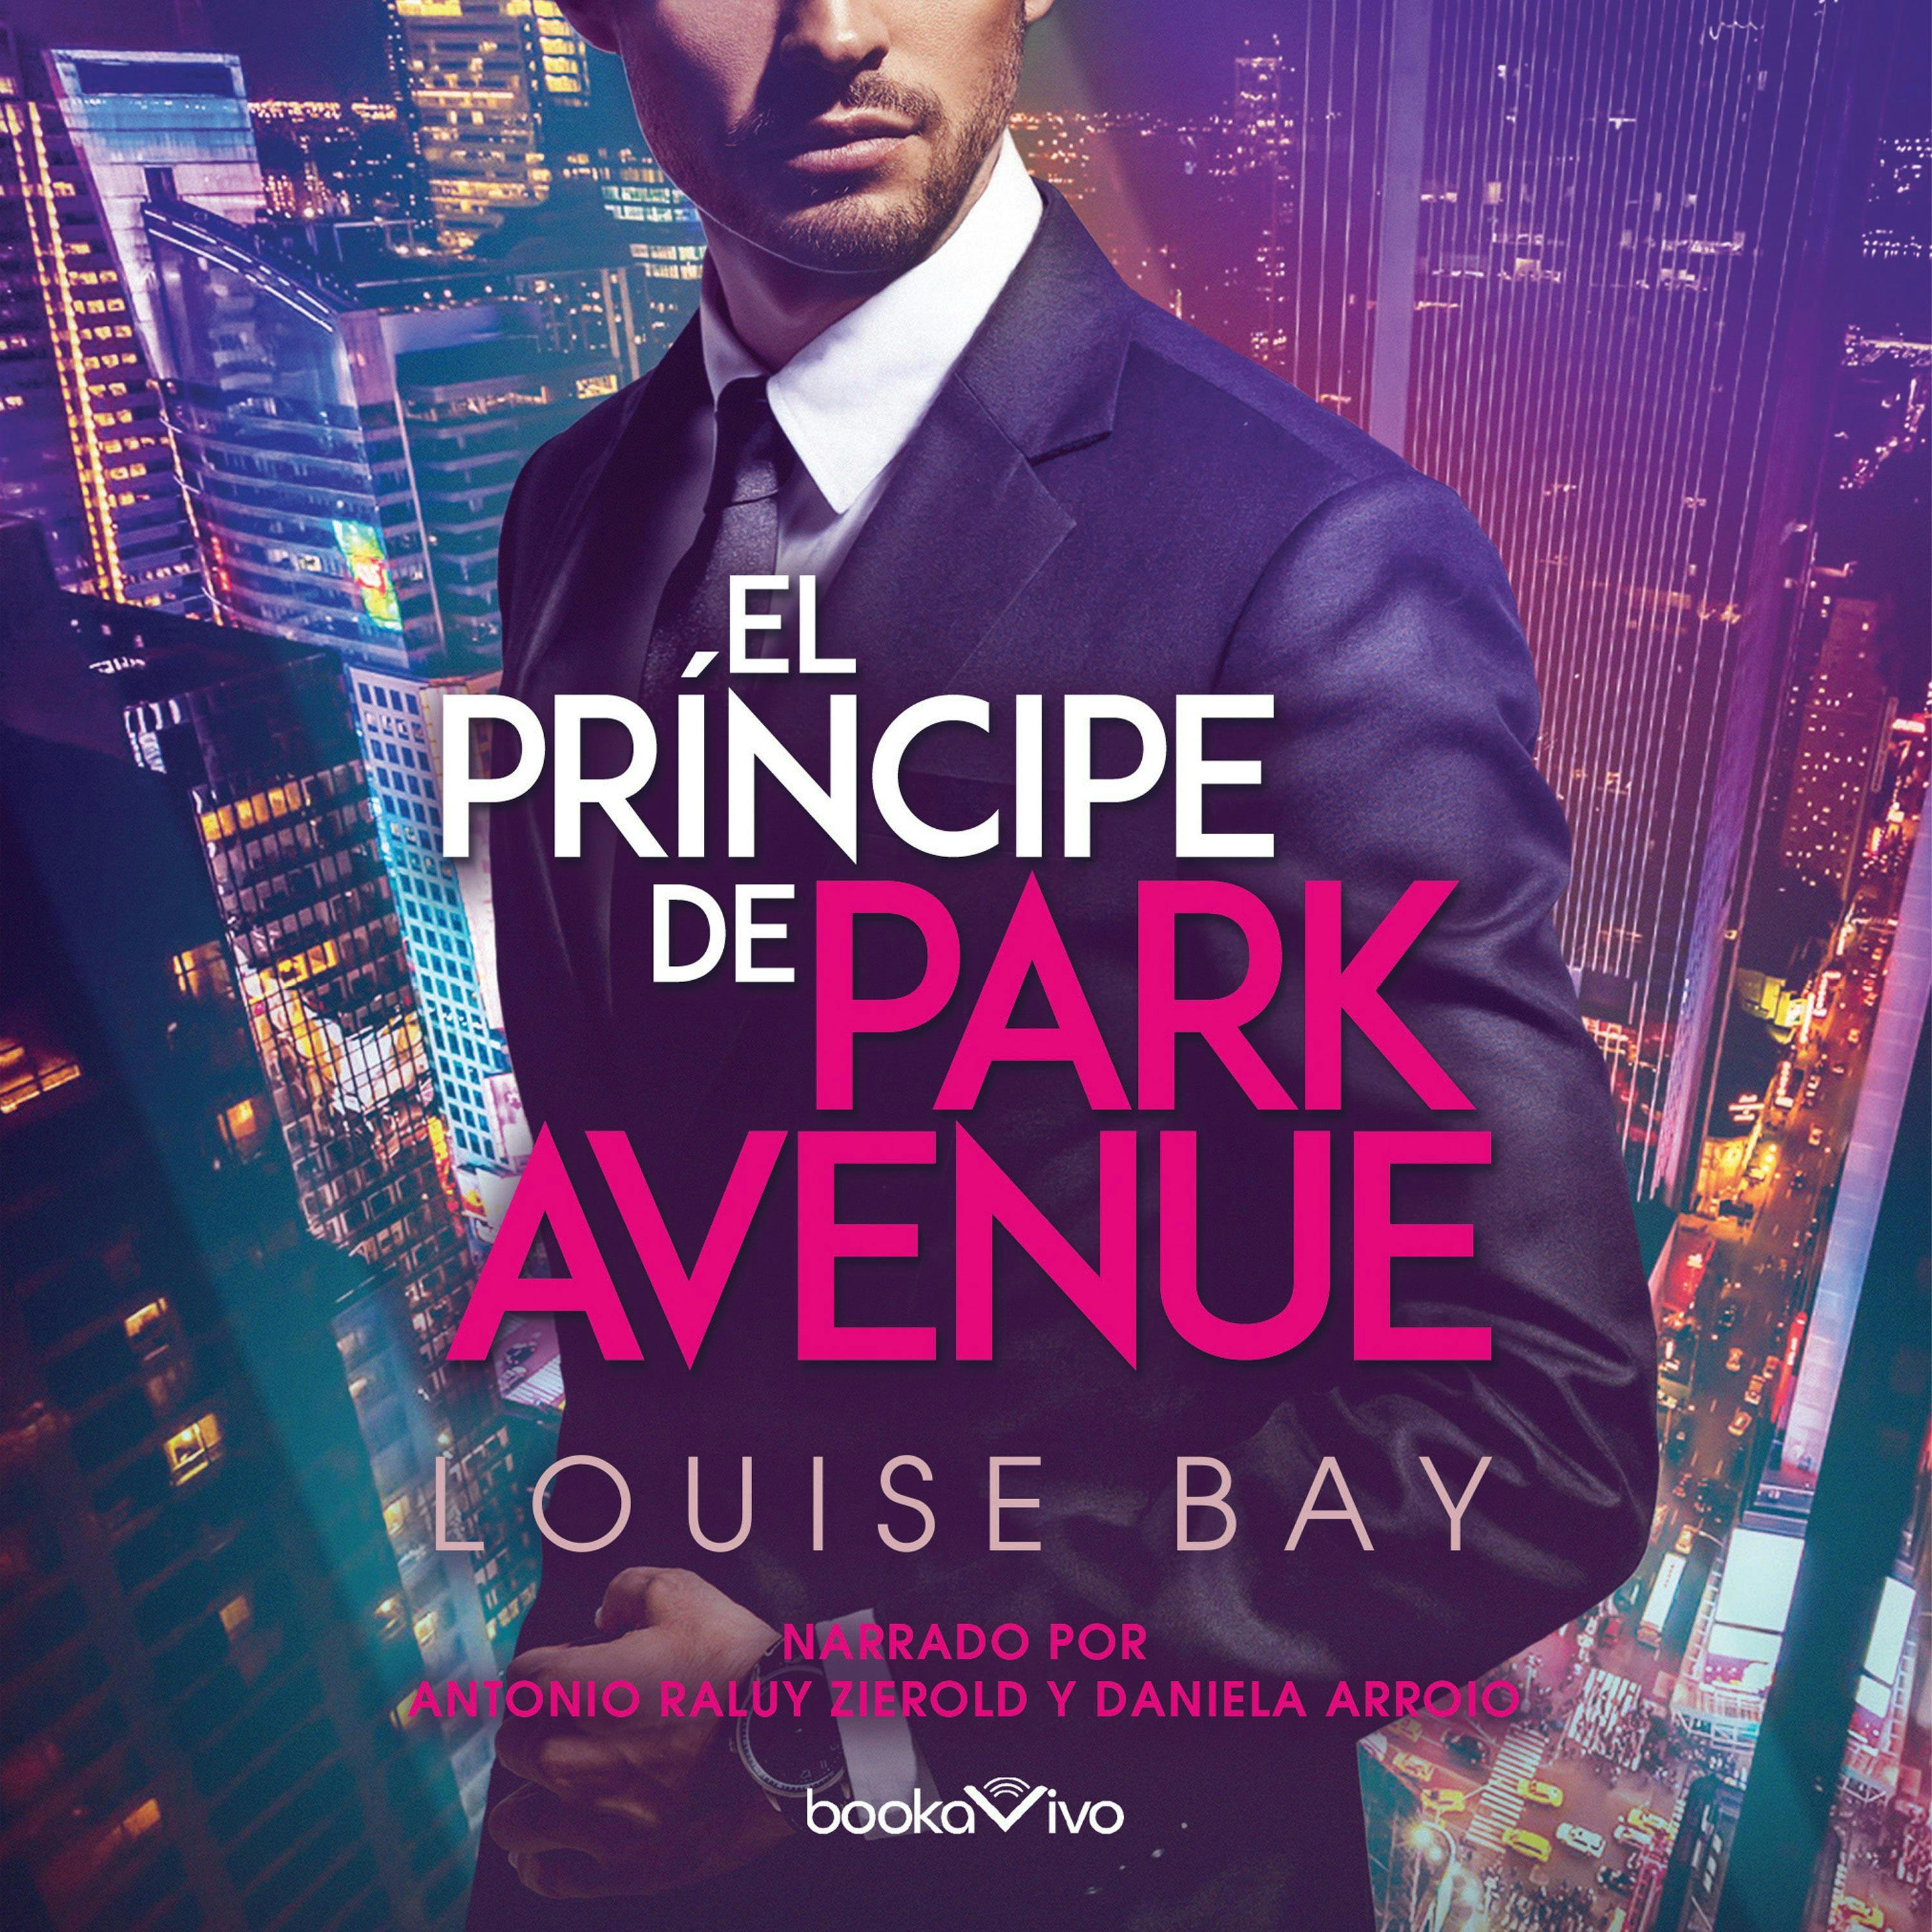 El principe de Park Avenue (Prince of Park Avenue) - undefined